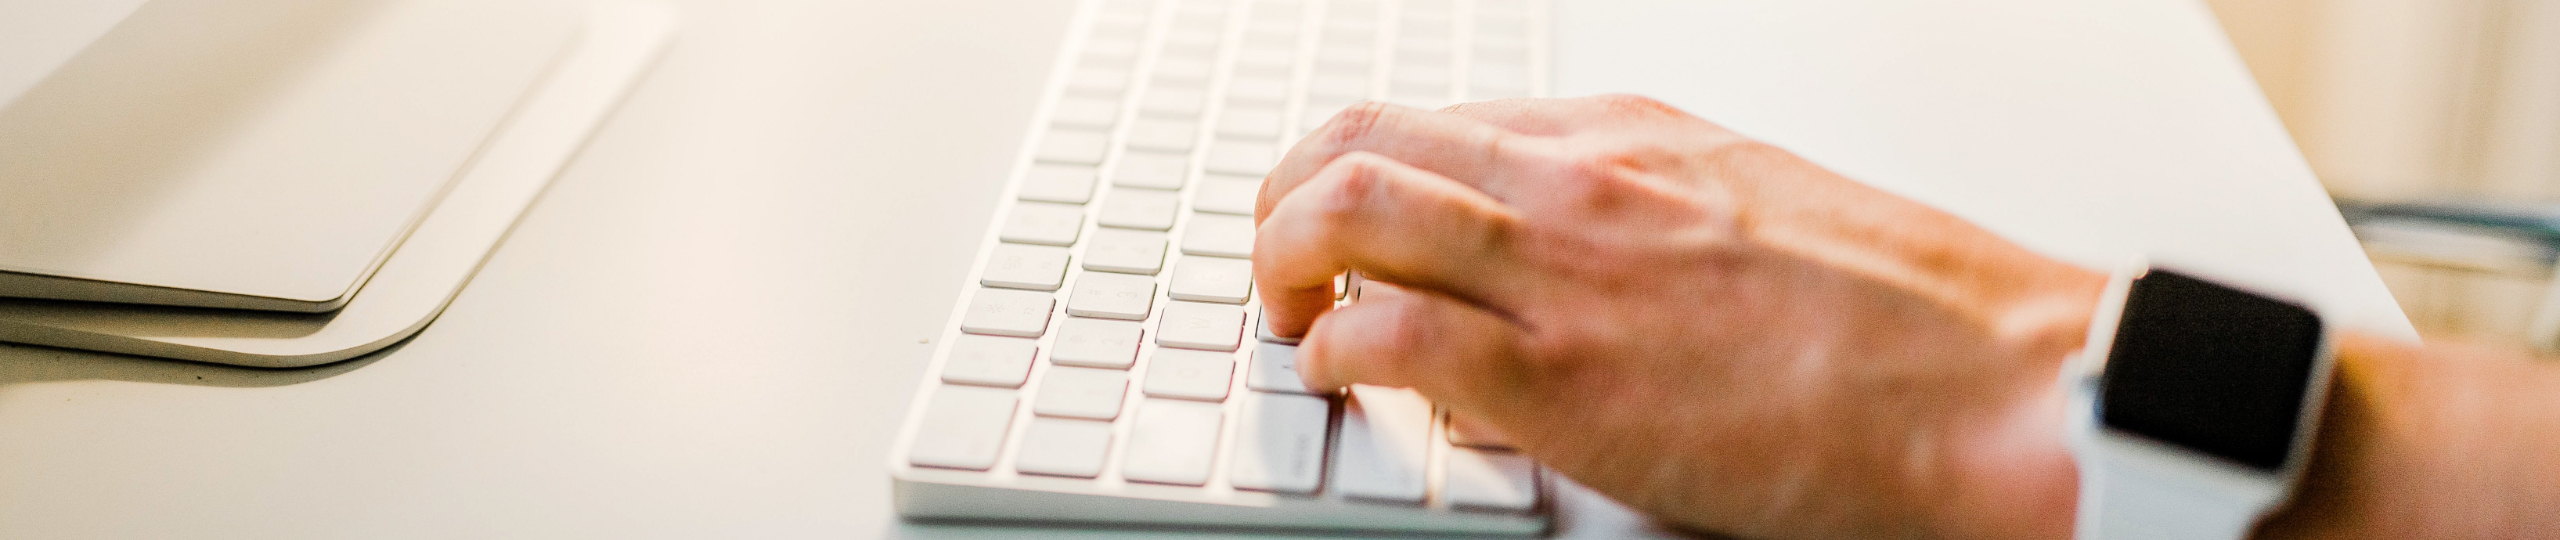 Login Top Banner - Hands Typing on keyboard